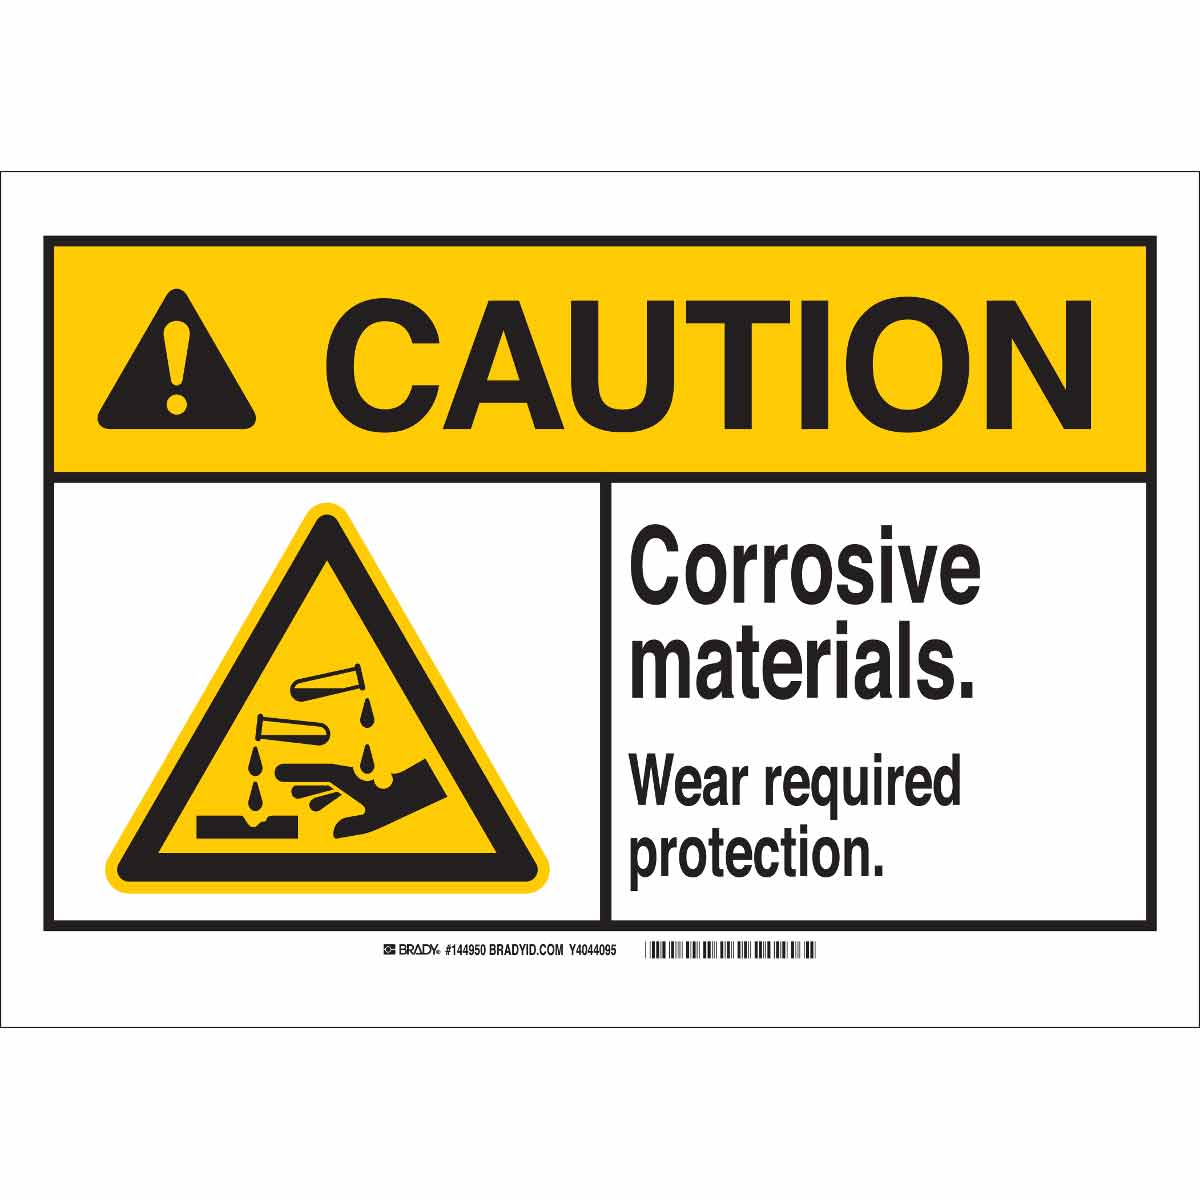 WARNING CAUTION CORROSIVE SUBSTANCE OSHA DECAL SAFETY SIGN STICKER 3M US MADE